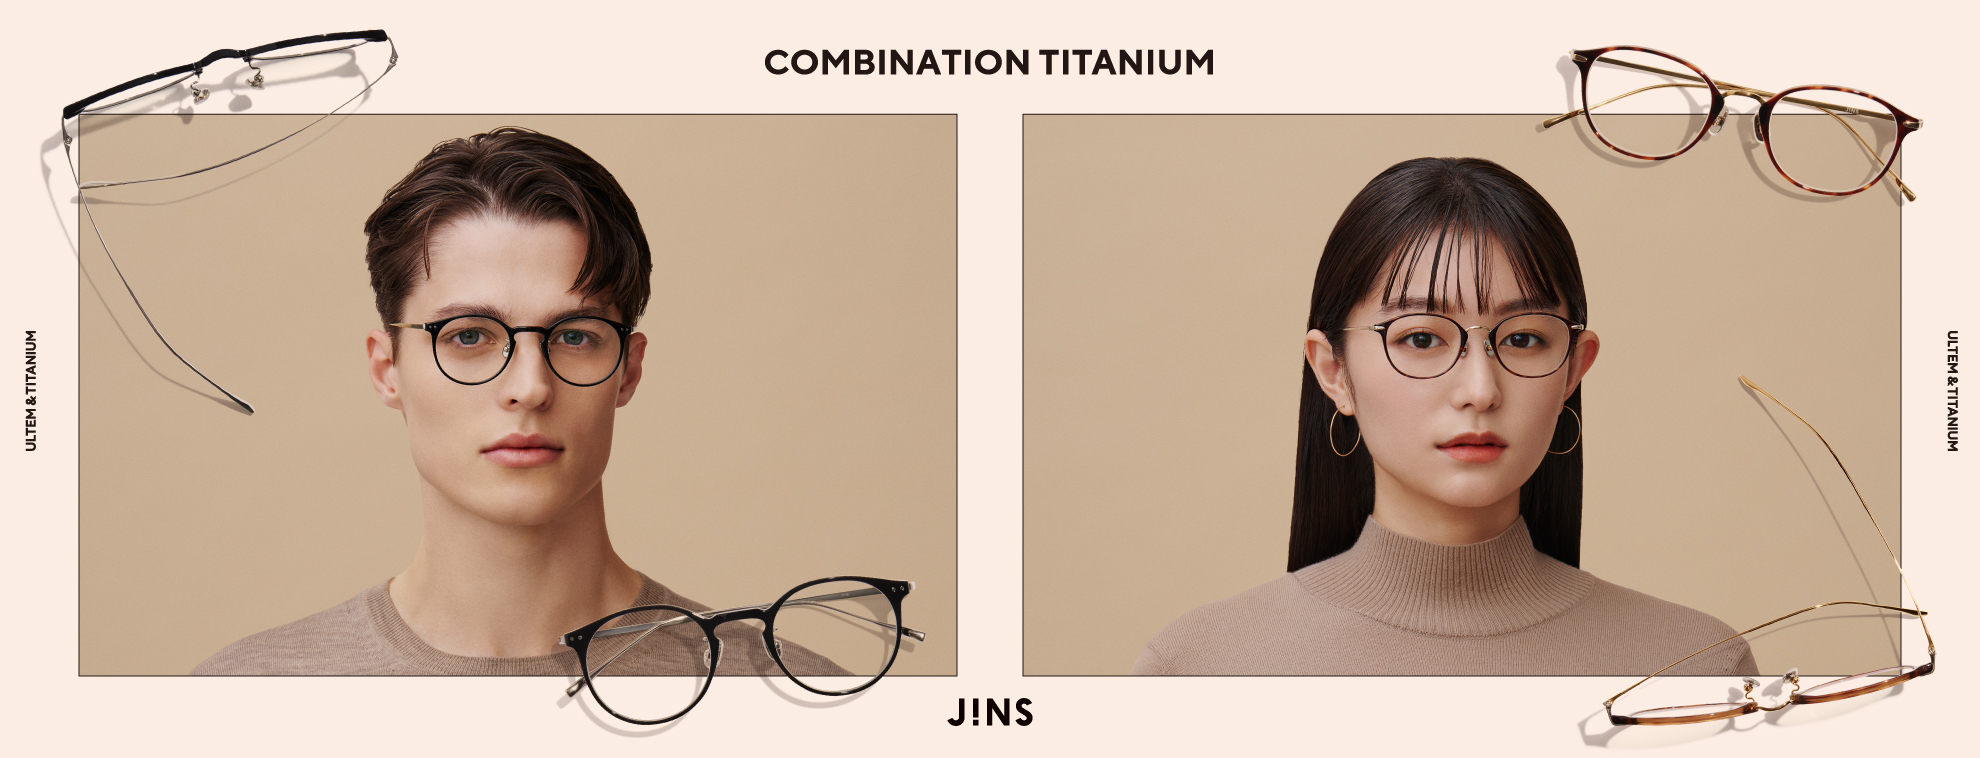 JINSの3年連続売上No.1商品「Combination Titanium」からシックな新作